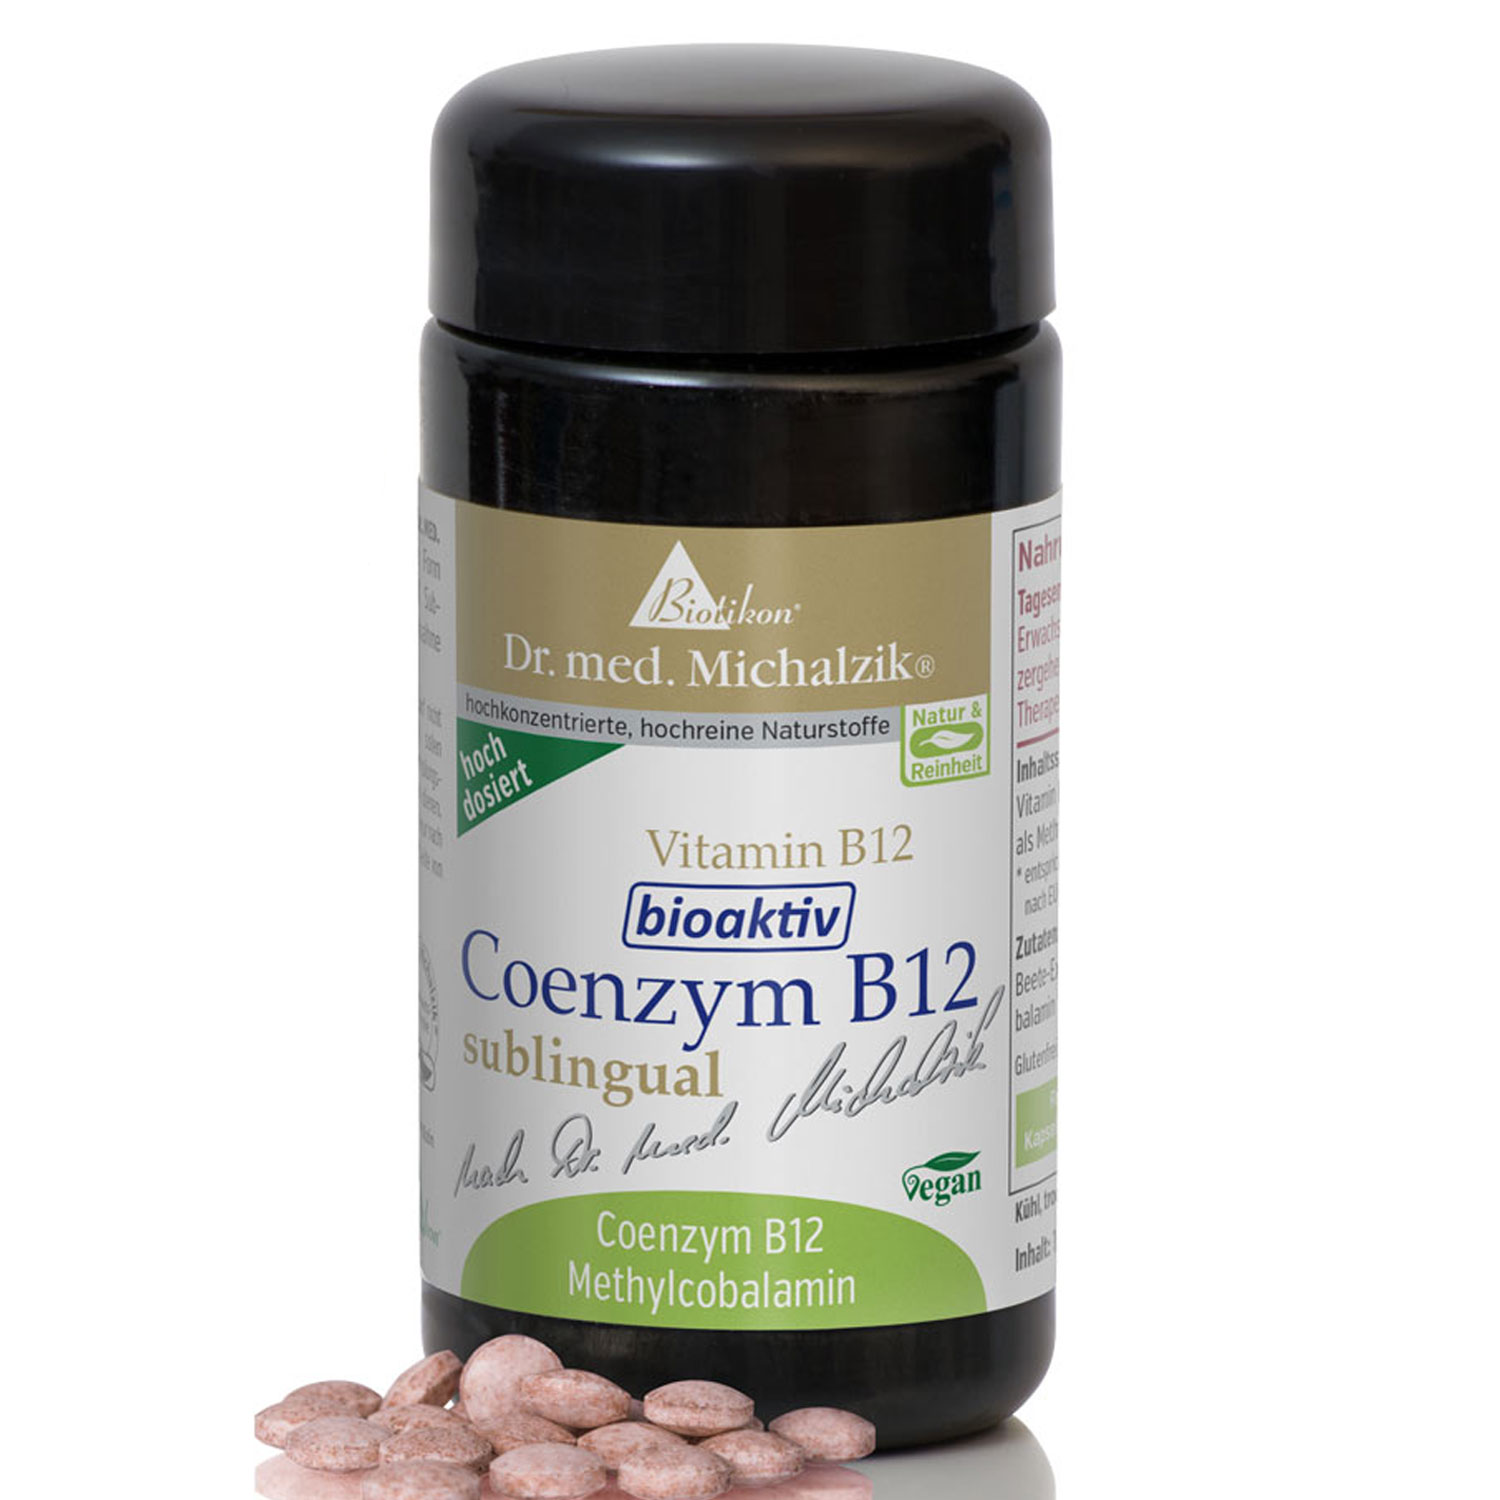 Coenzym B12 bioaktiv, sublingual von Biotikon